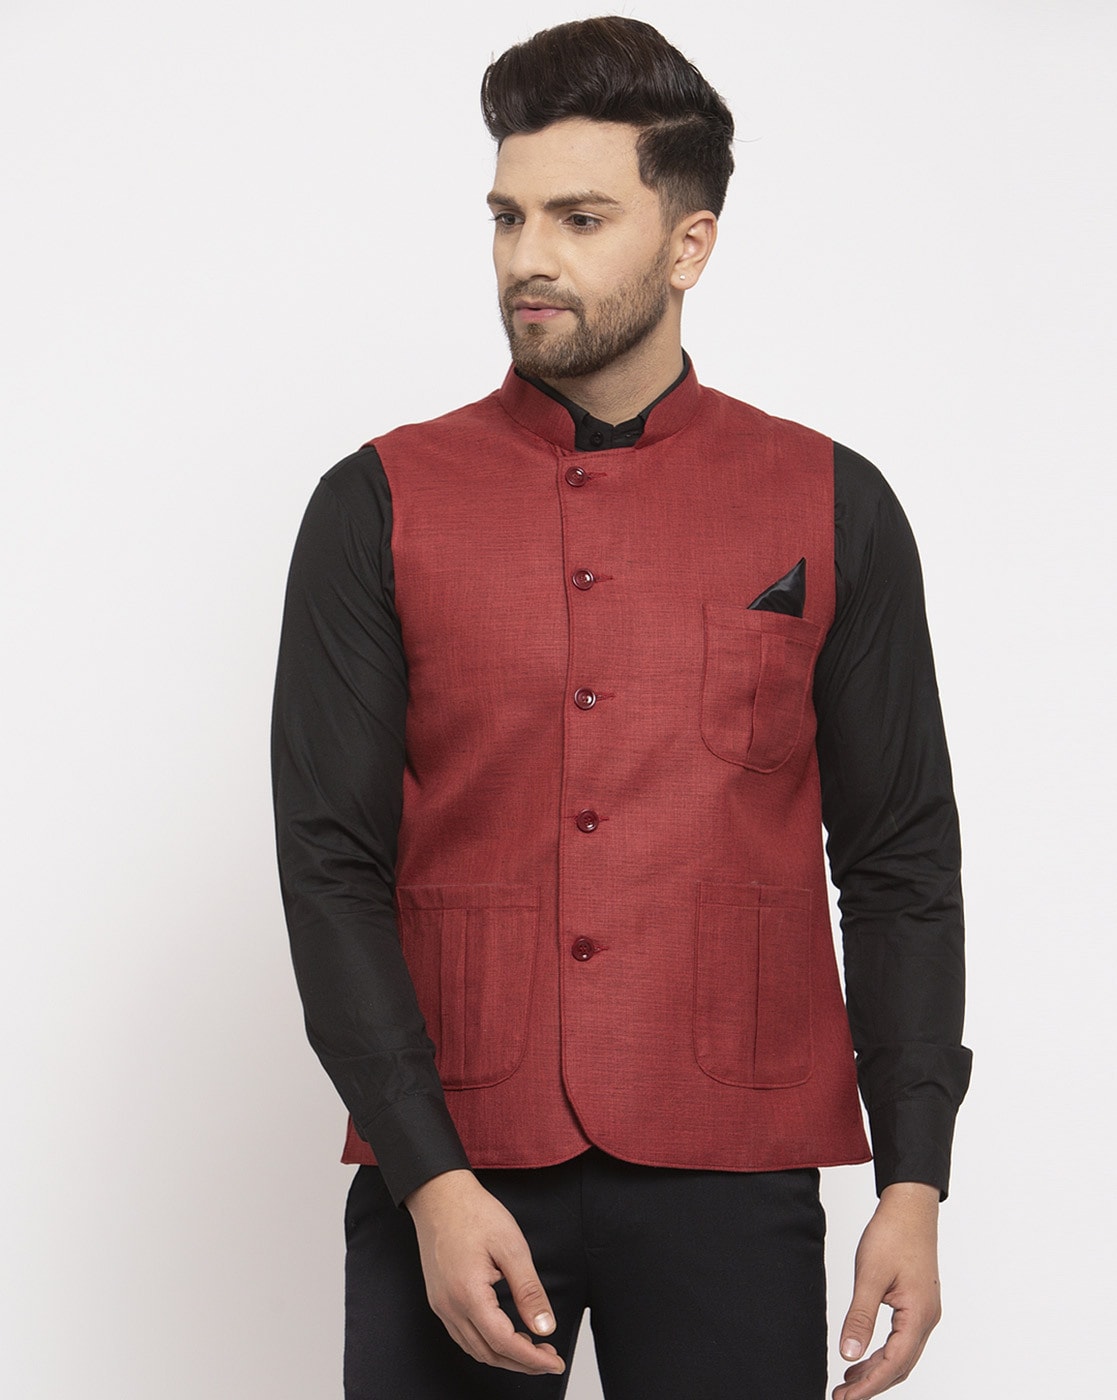 Wintage Men's Wool Blend Grandad Nehru Jacket Vest Waistcoat: Dark Maroon